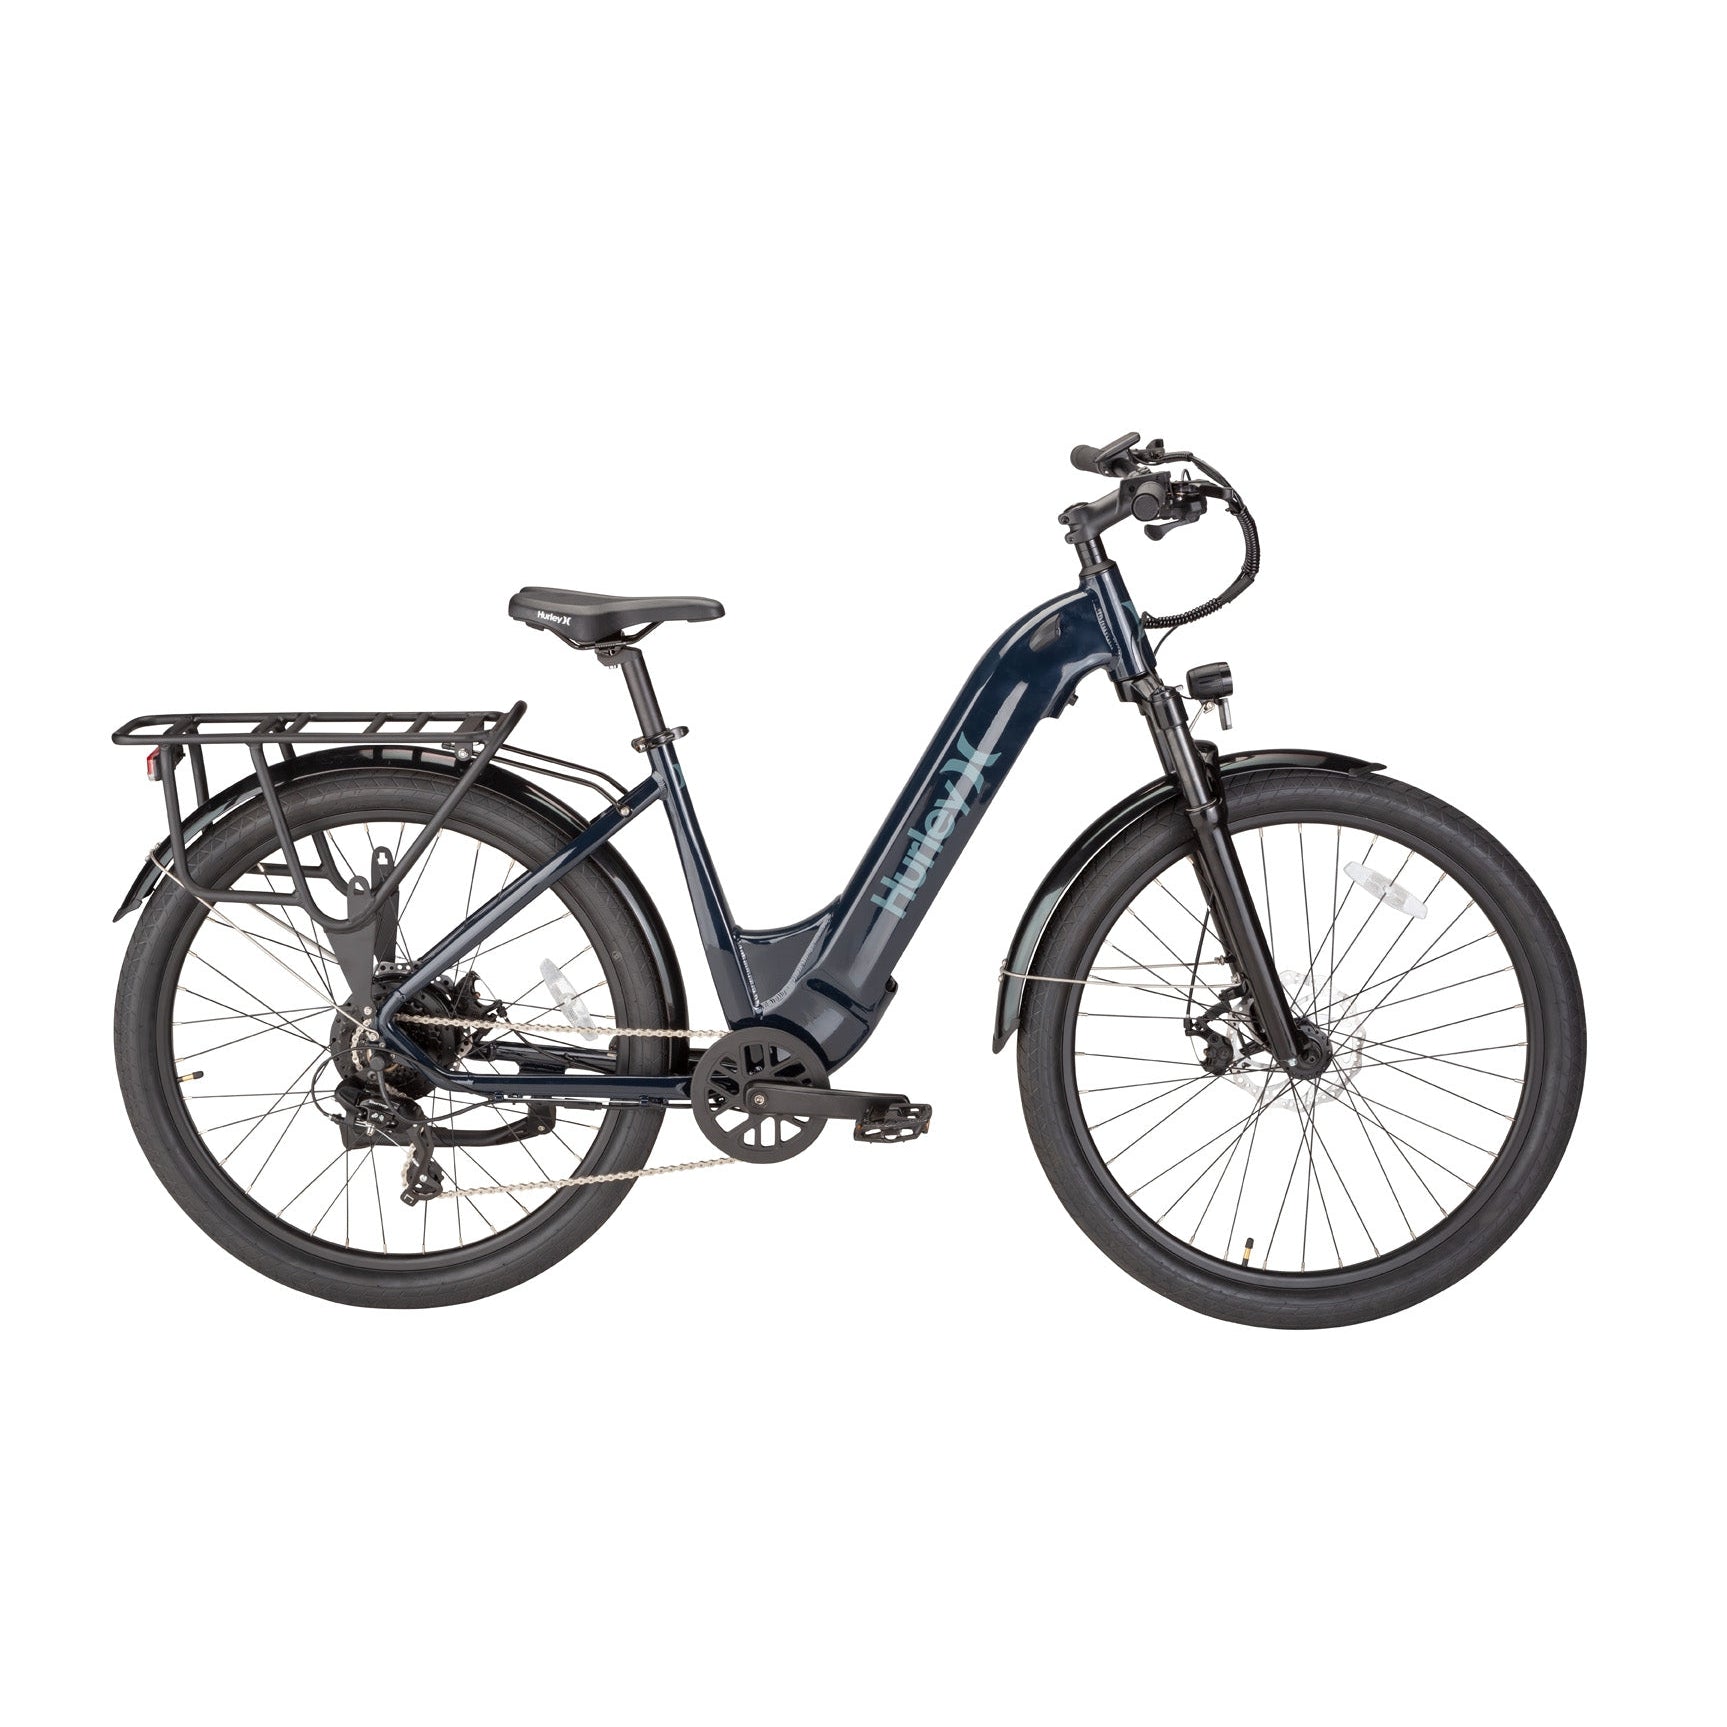 Hurley Swell 4U Electric Bike - Bikes - Bicycle Warehouse